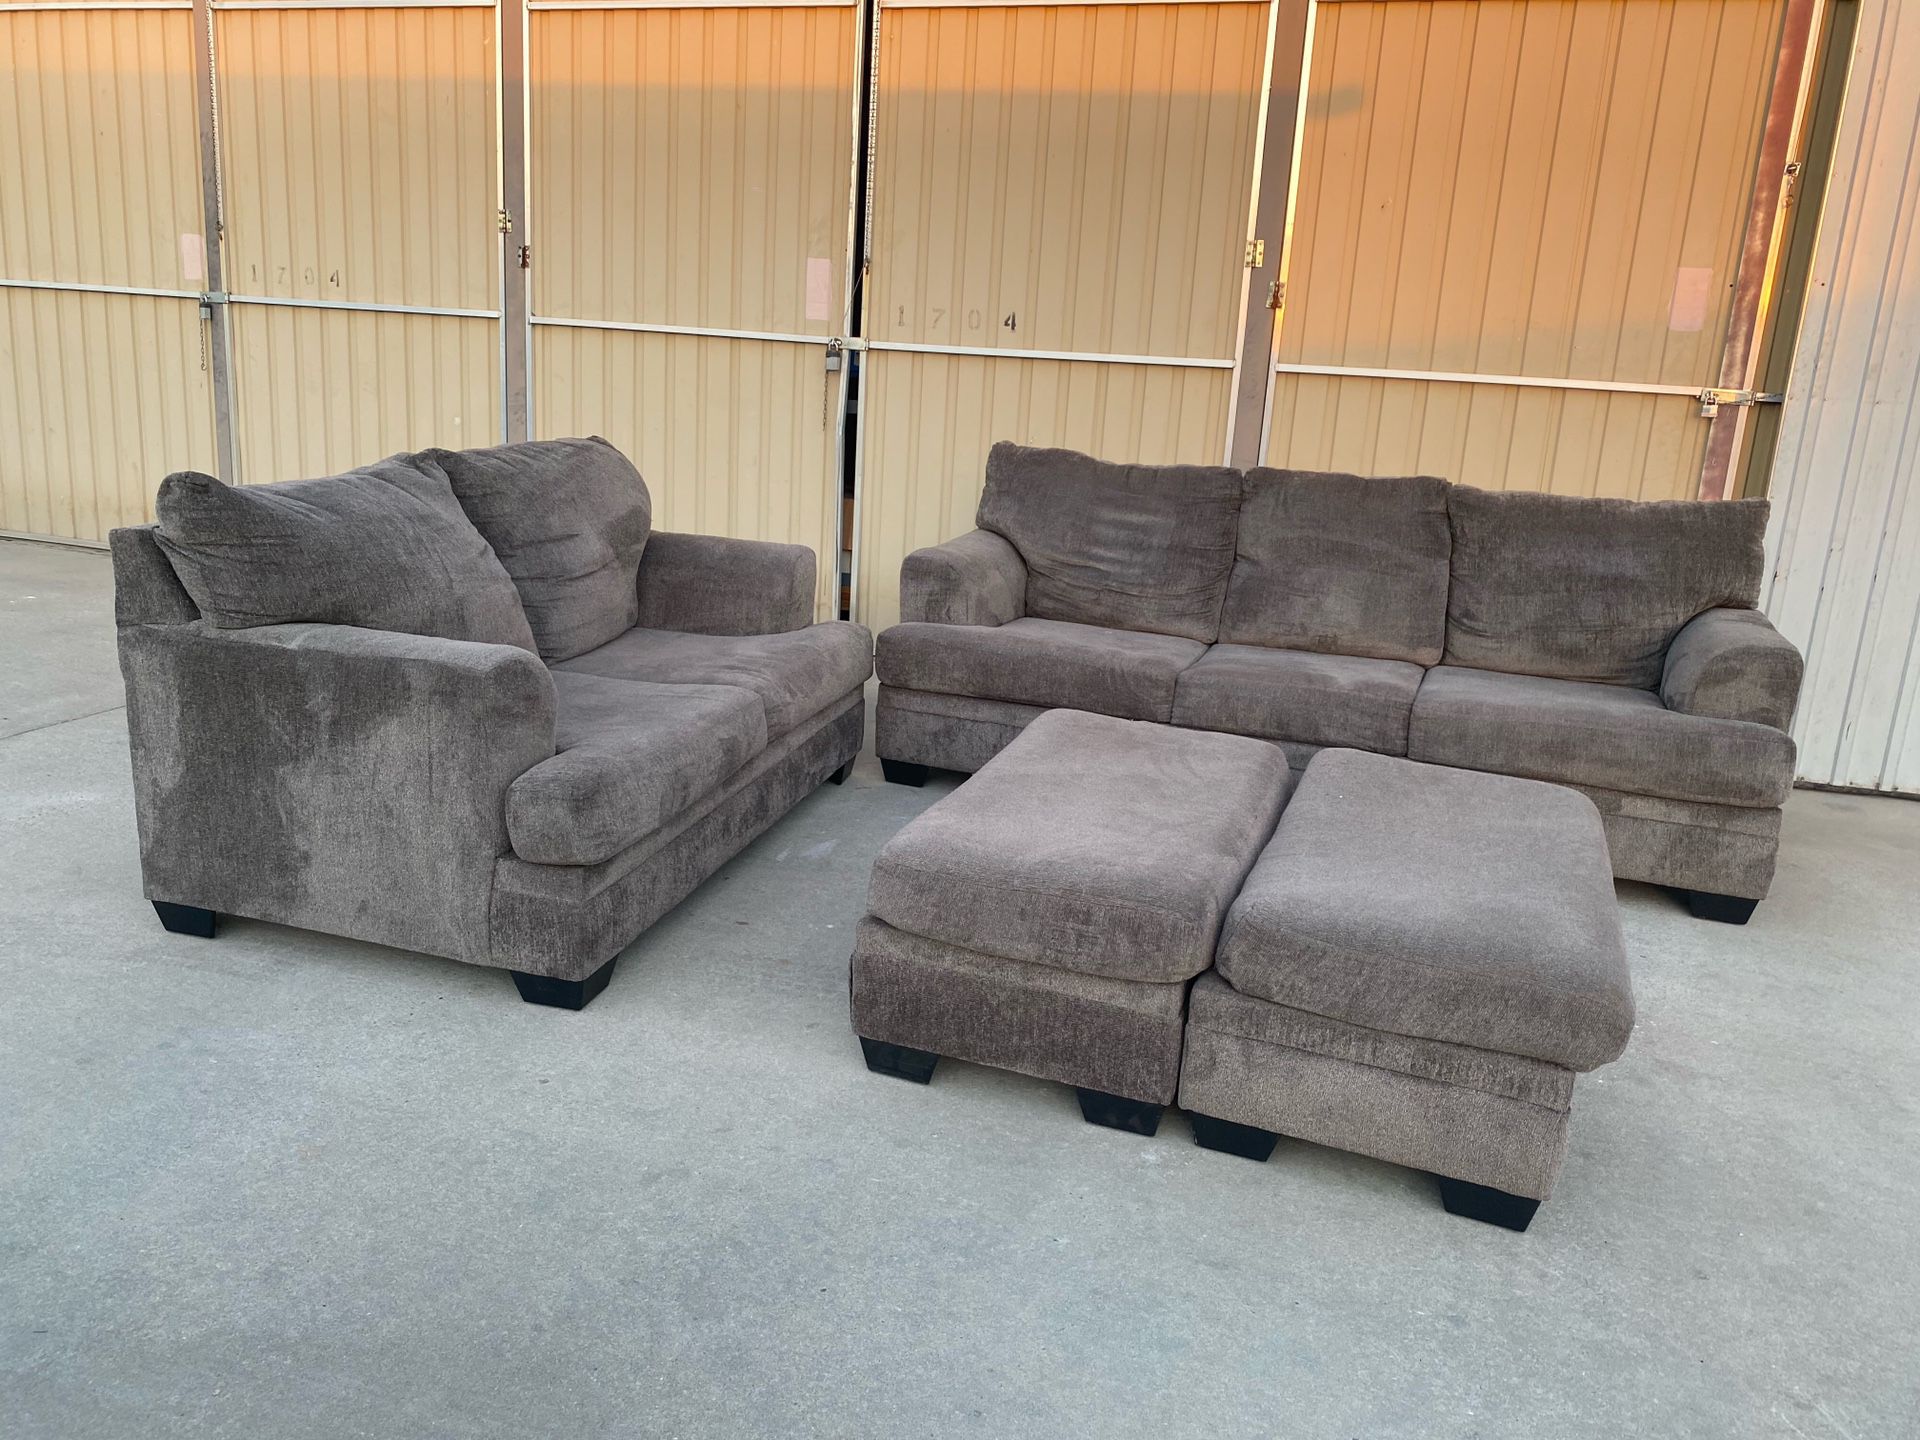 Set couches